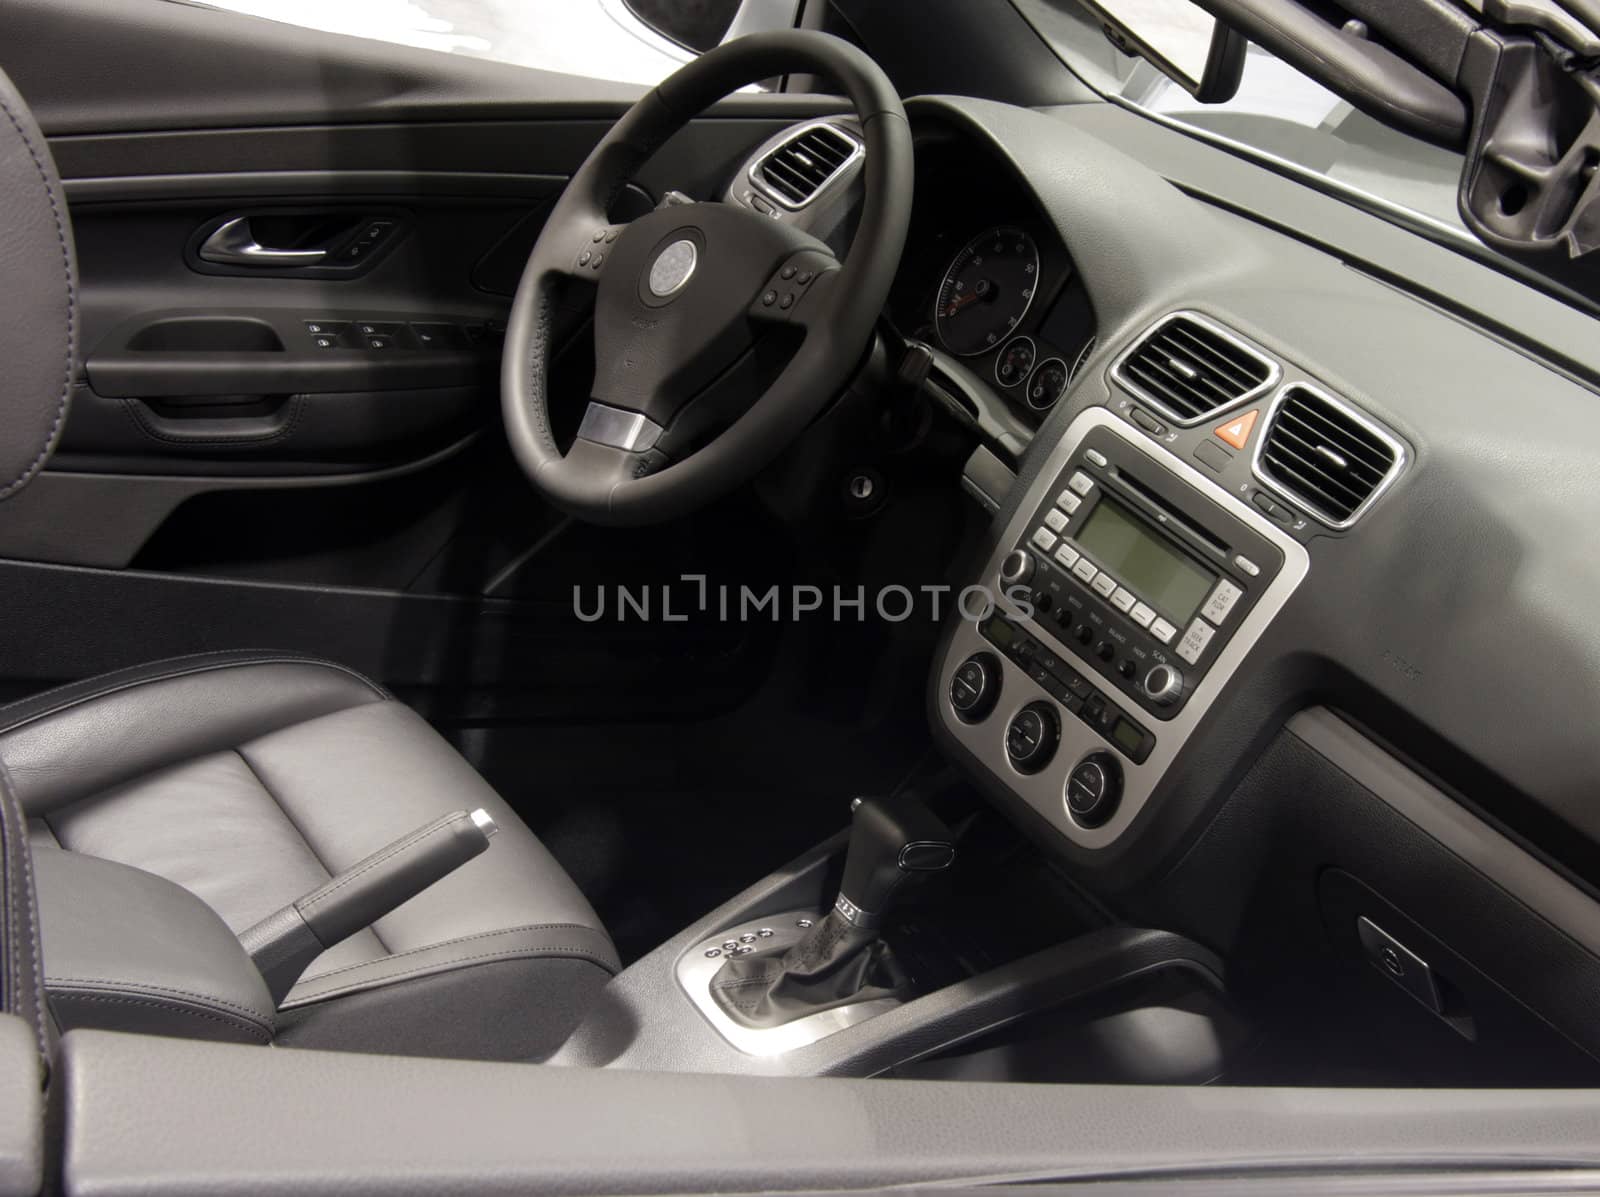 Motor Vehicle interior